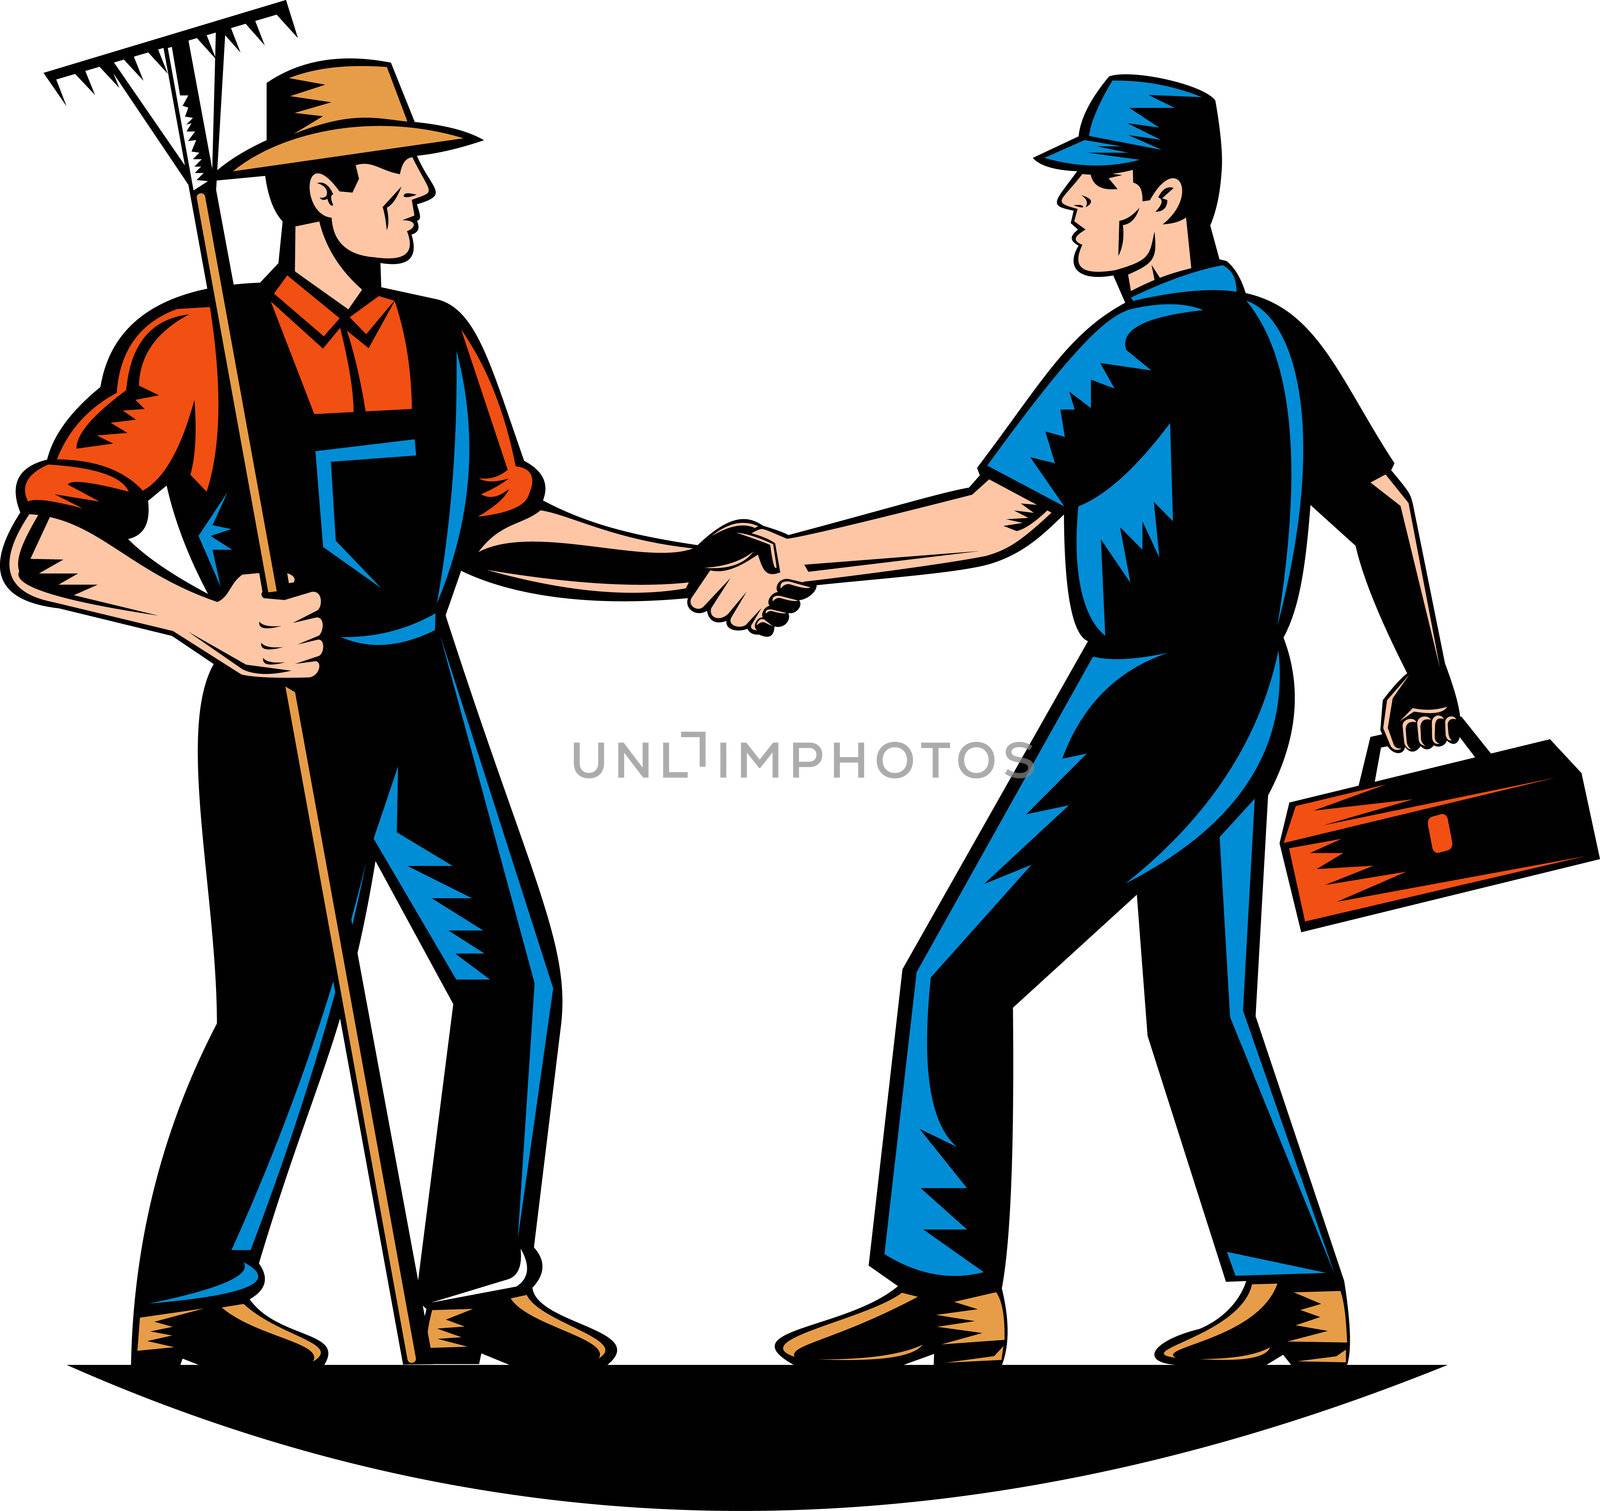 vector illustration of a farmer and a tradesman,repairman,plumber or handyman shaking hands